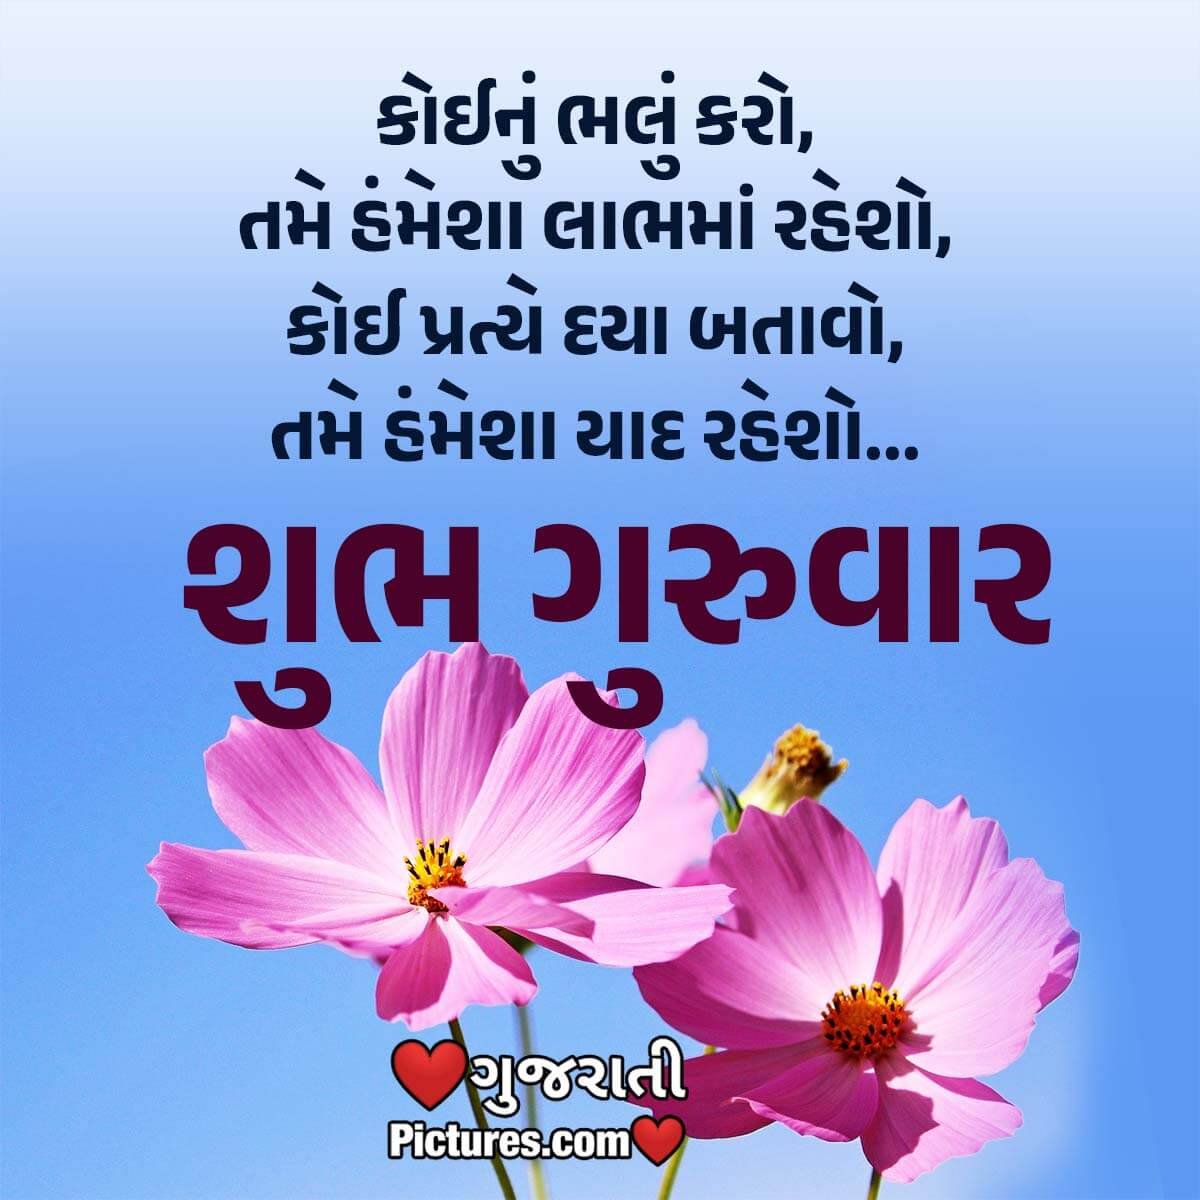 Shubh Guruwar Gujarati Quote